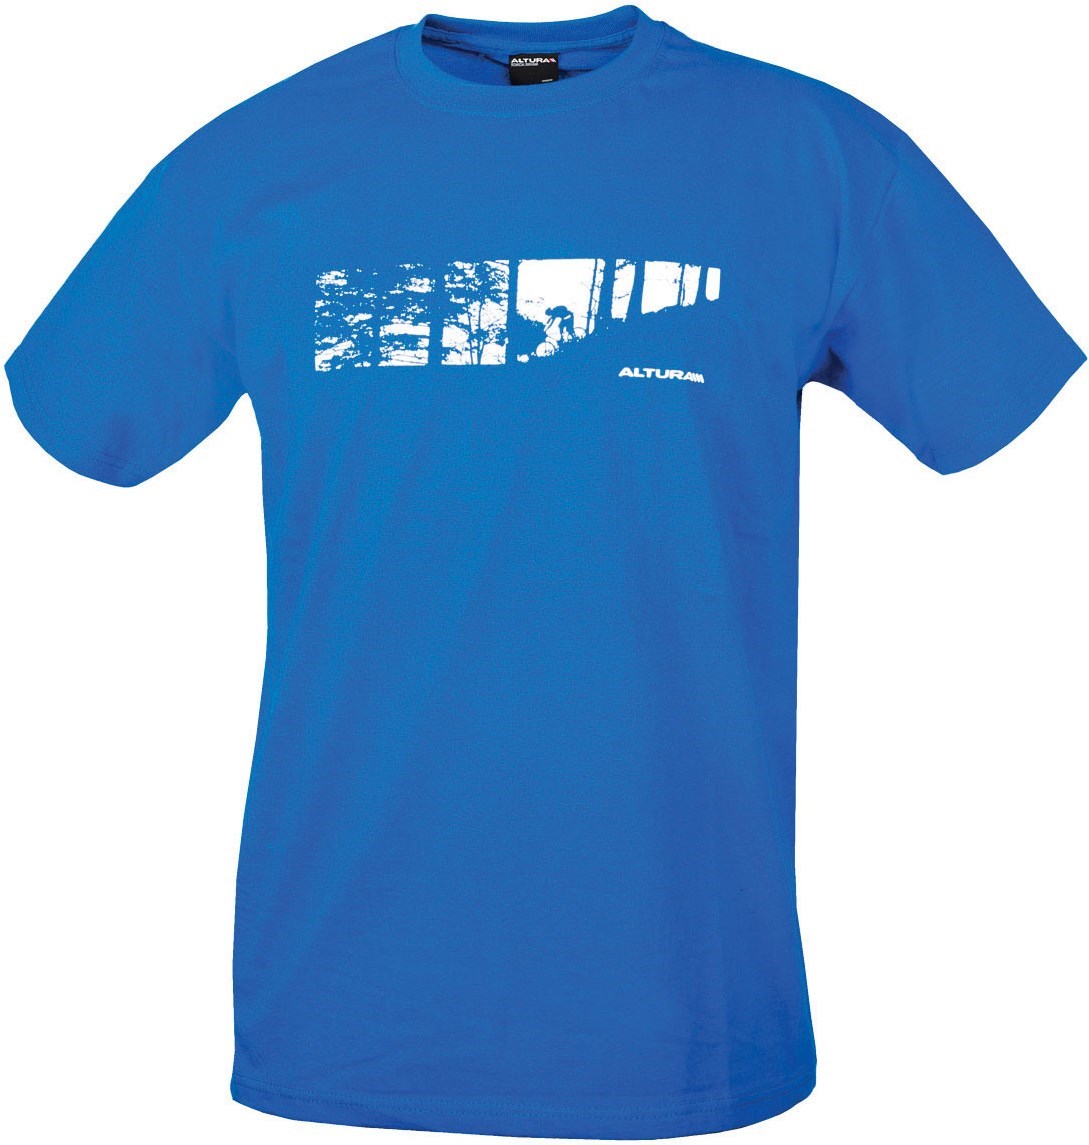 Altura Mountain Bike Tee Shirt 2014 product image